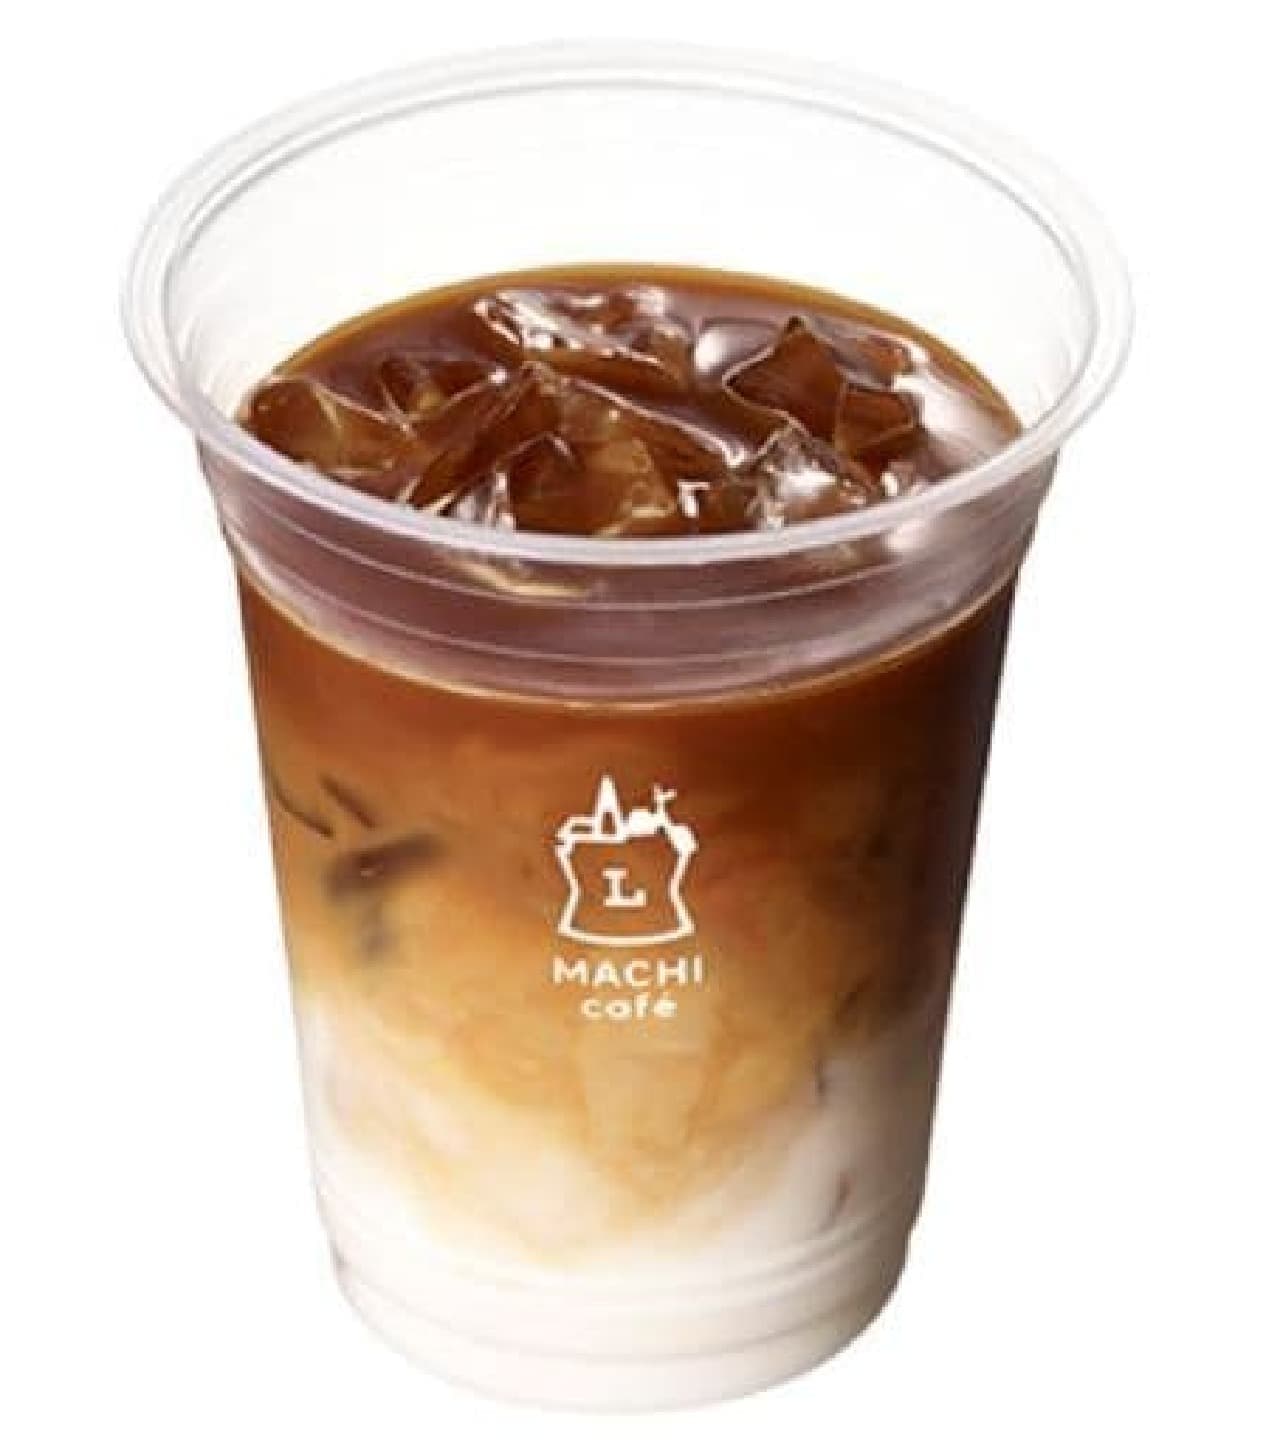 LAWSON Machi Cafe "Iced Cafe Latte